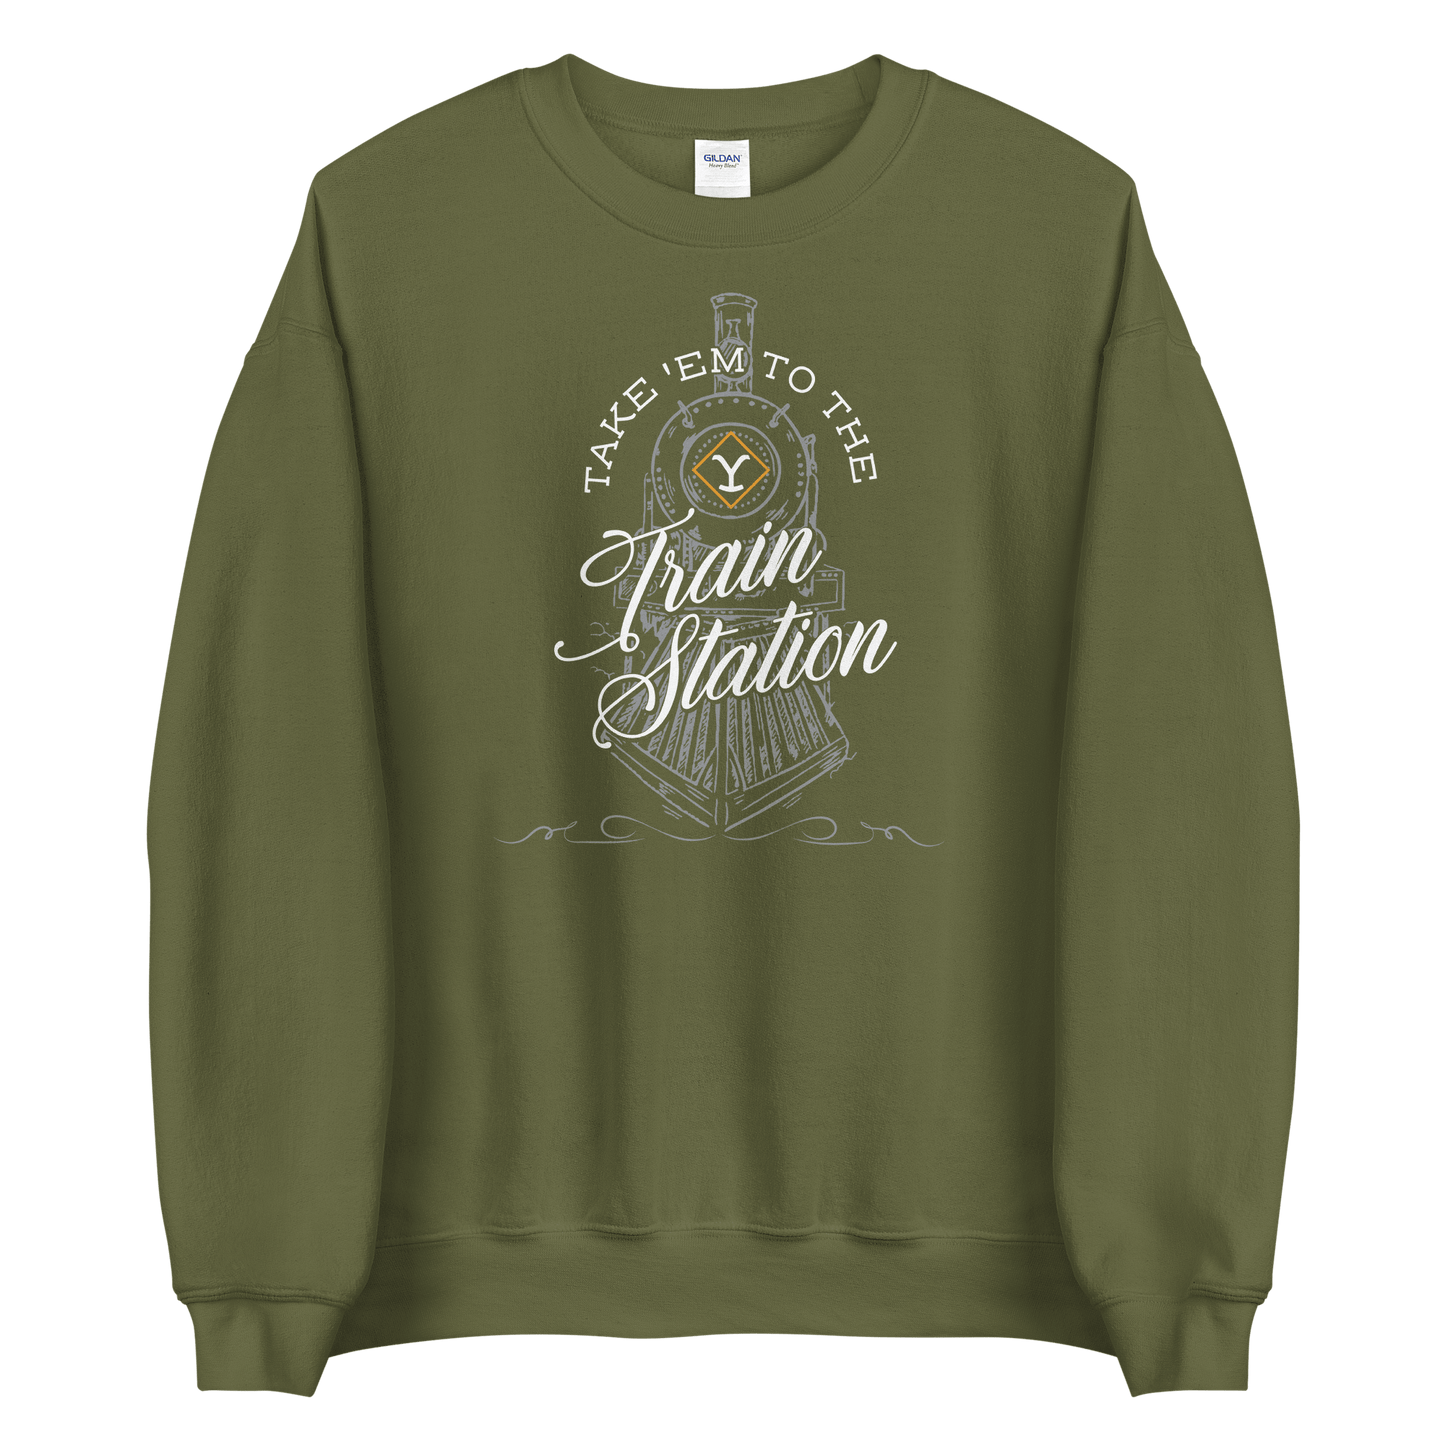 Yellowstone Take 'Em To The Train Station Fleece Crewneck Sweatshirt - Paramount Shop